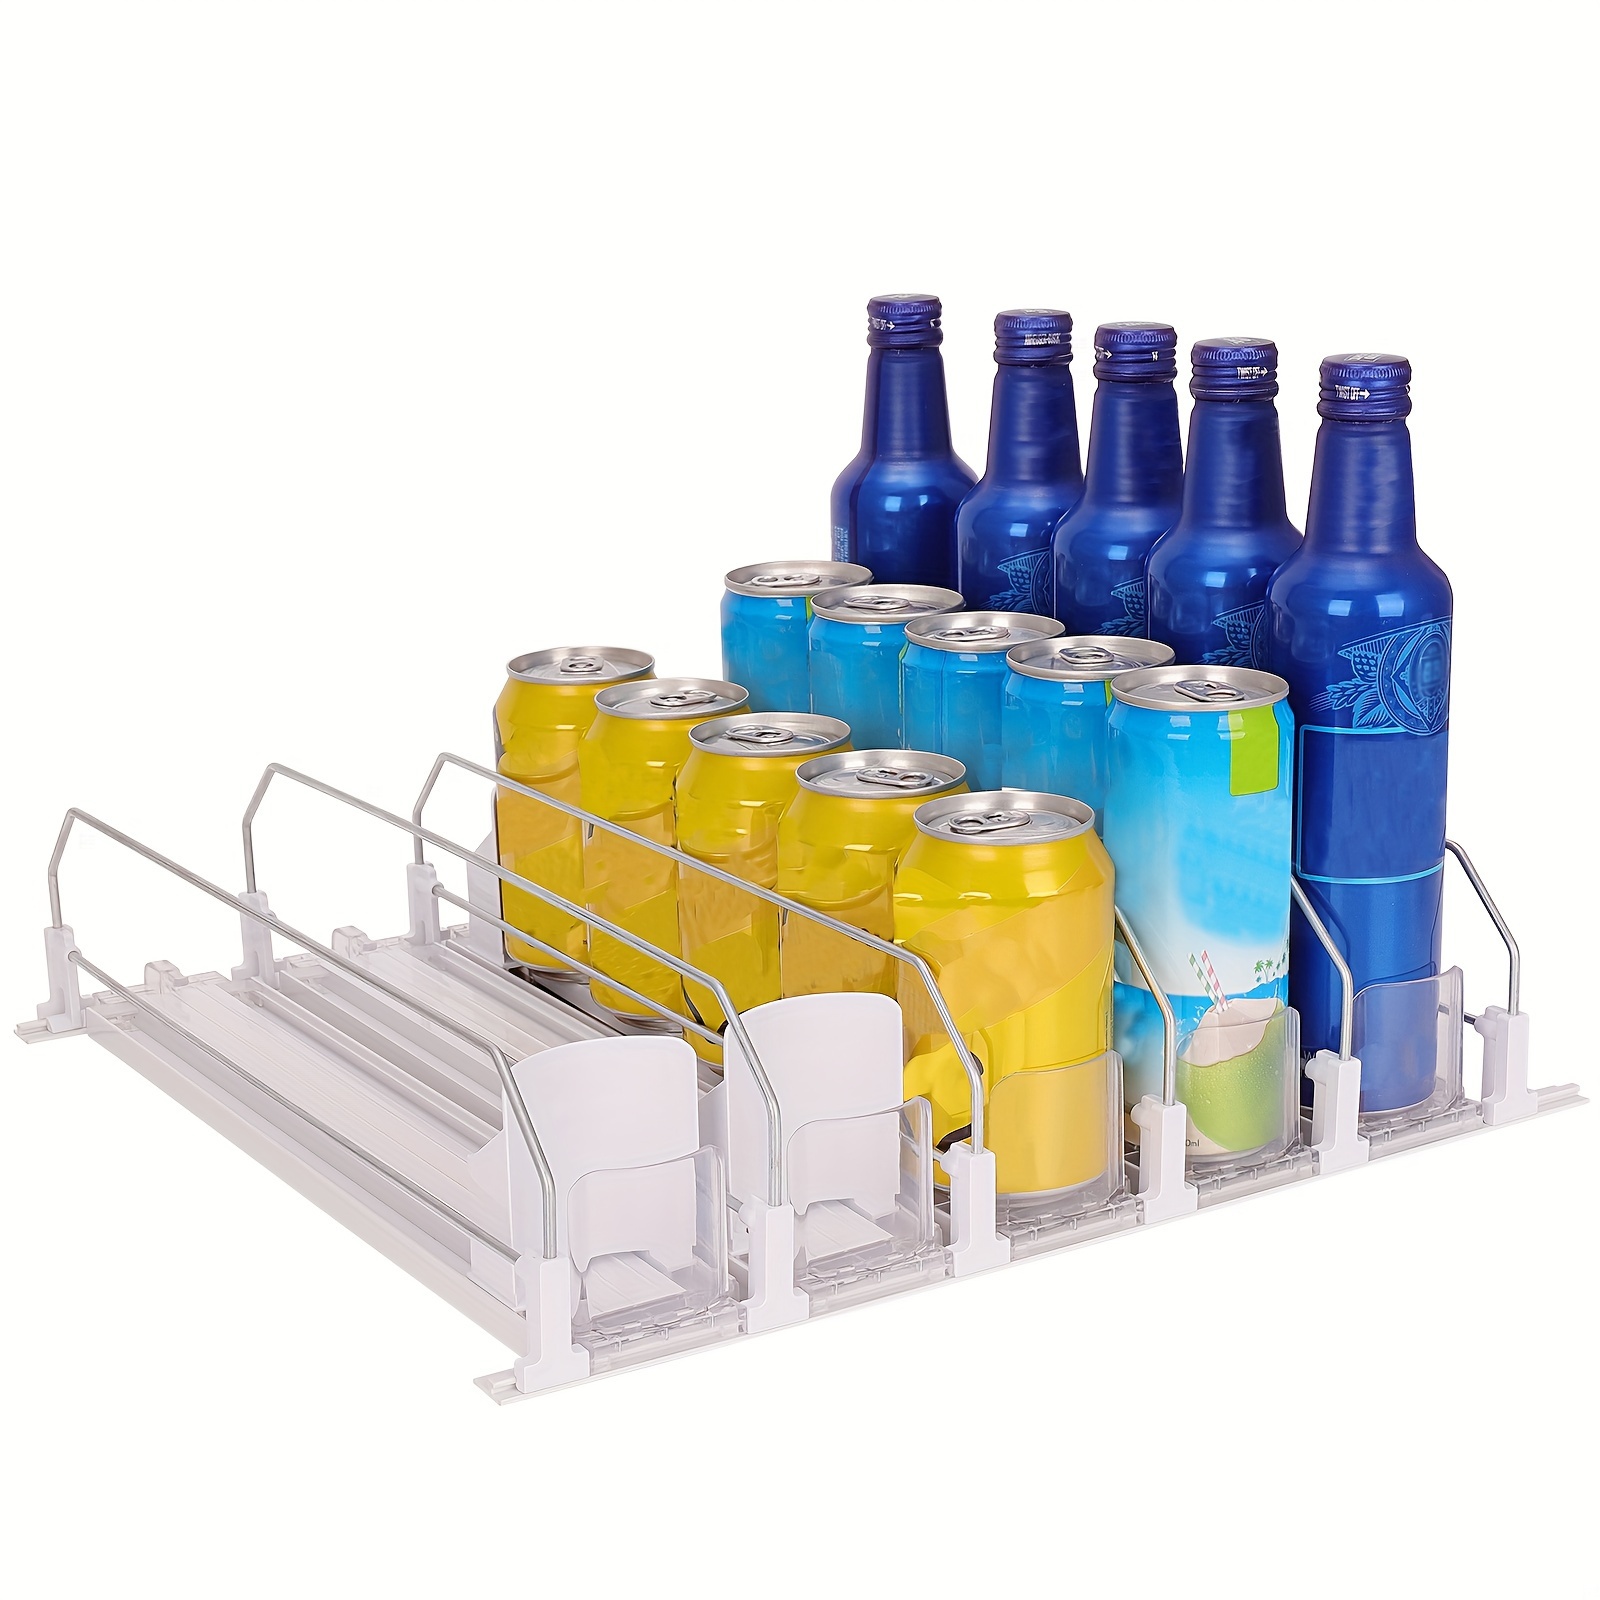 Organizador de latas de refresco para refrigerador, soporte dispensador de  latas de bebidas, organizador de latas de refresco colgante de plástico,  estante deslizante de almacenamiento para nevera